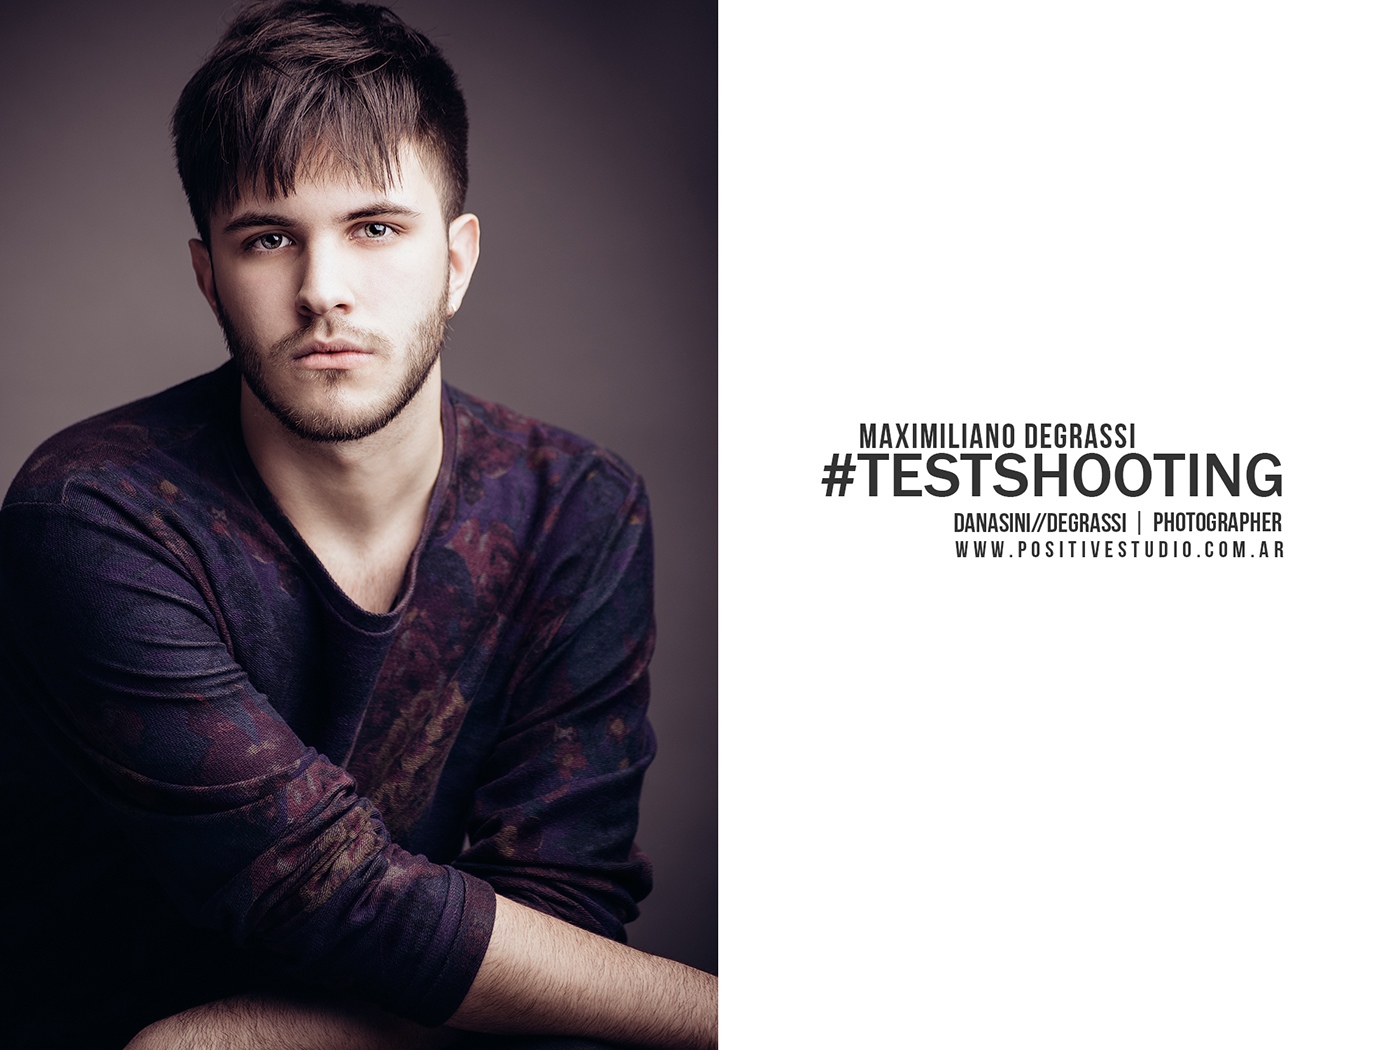 Fotografia positive studio danasini/degrassi maxi degrassi dj photographer test testshooting model modelo men man